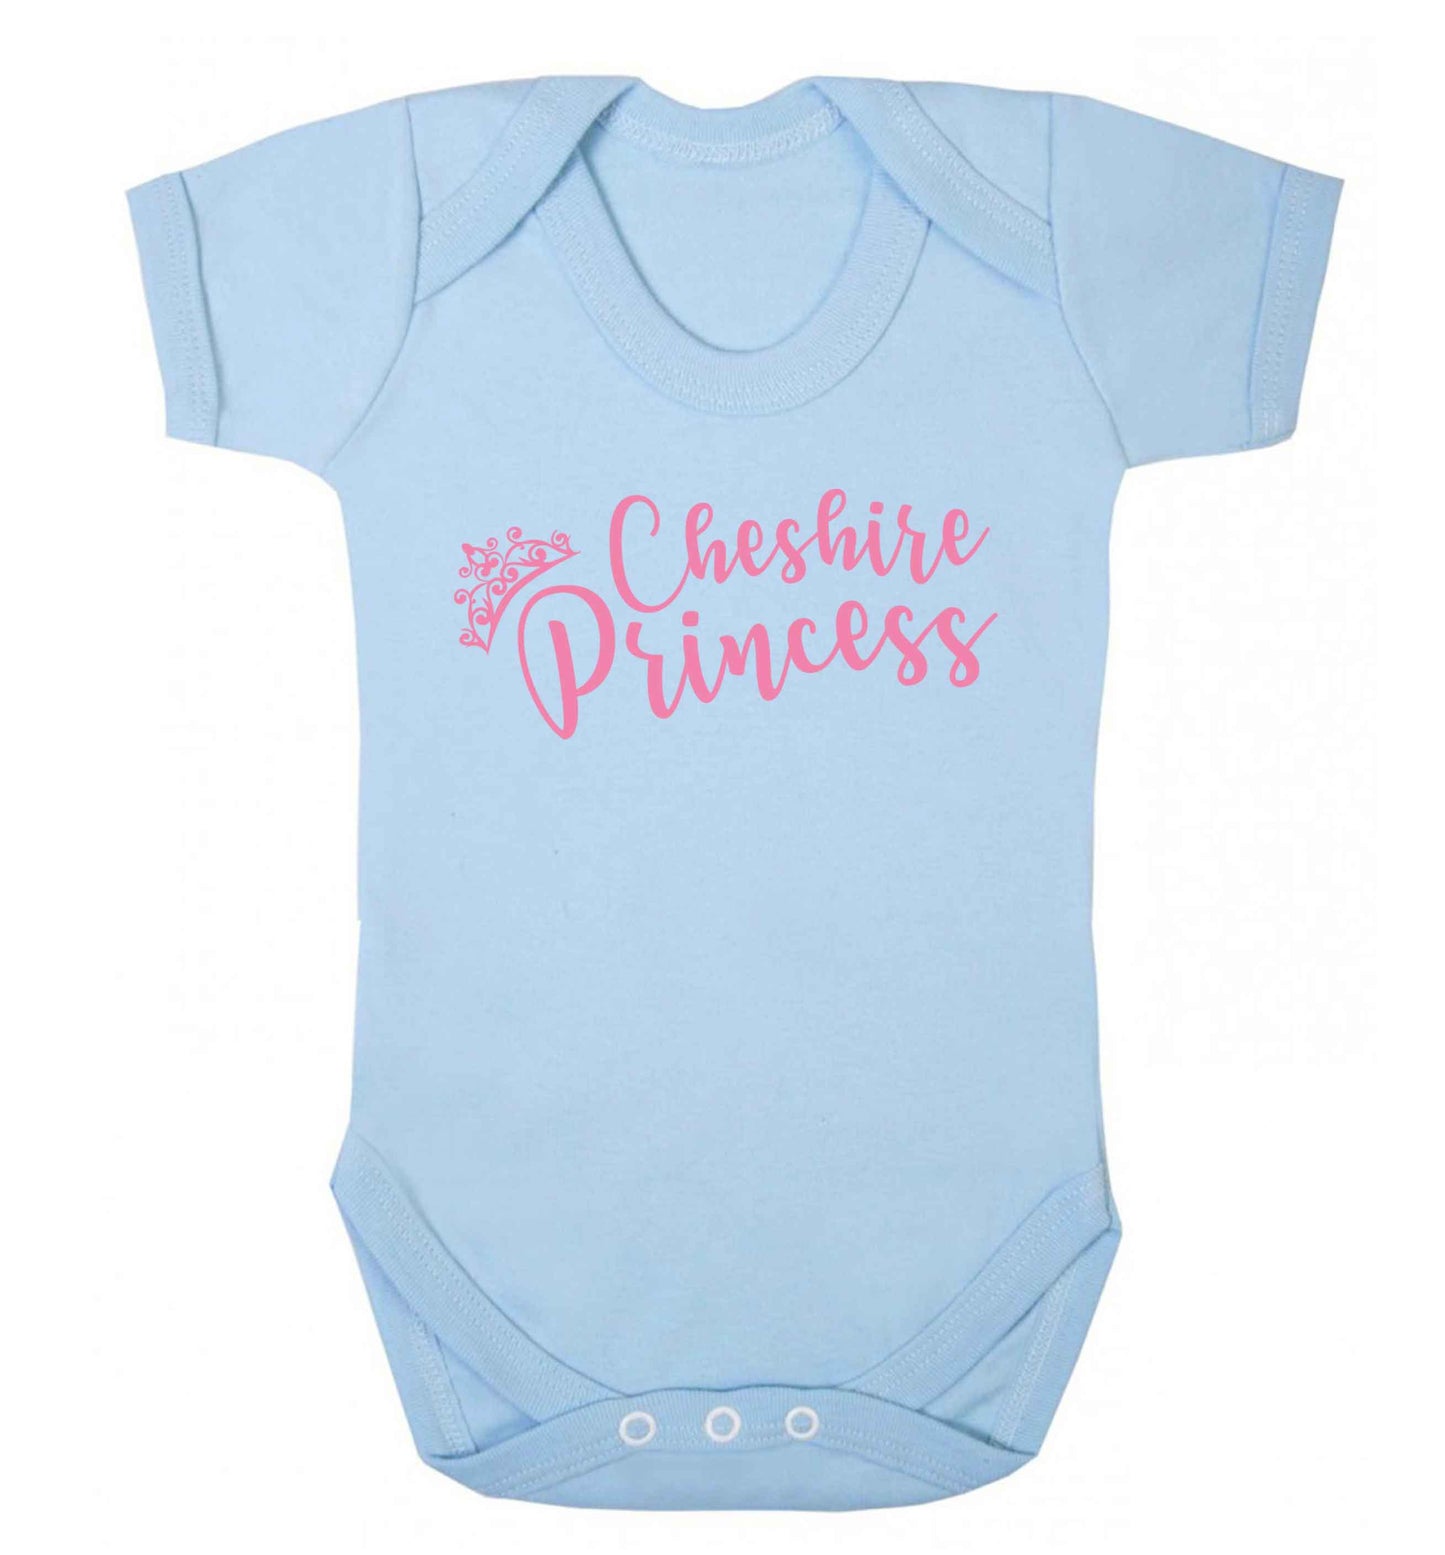 Cheshire princess Baby Vest pale blue 18-24 months